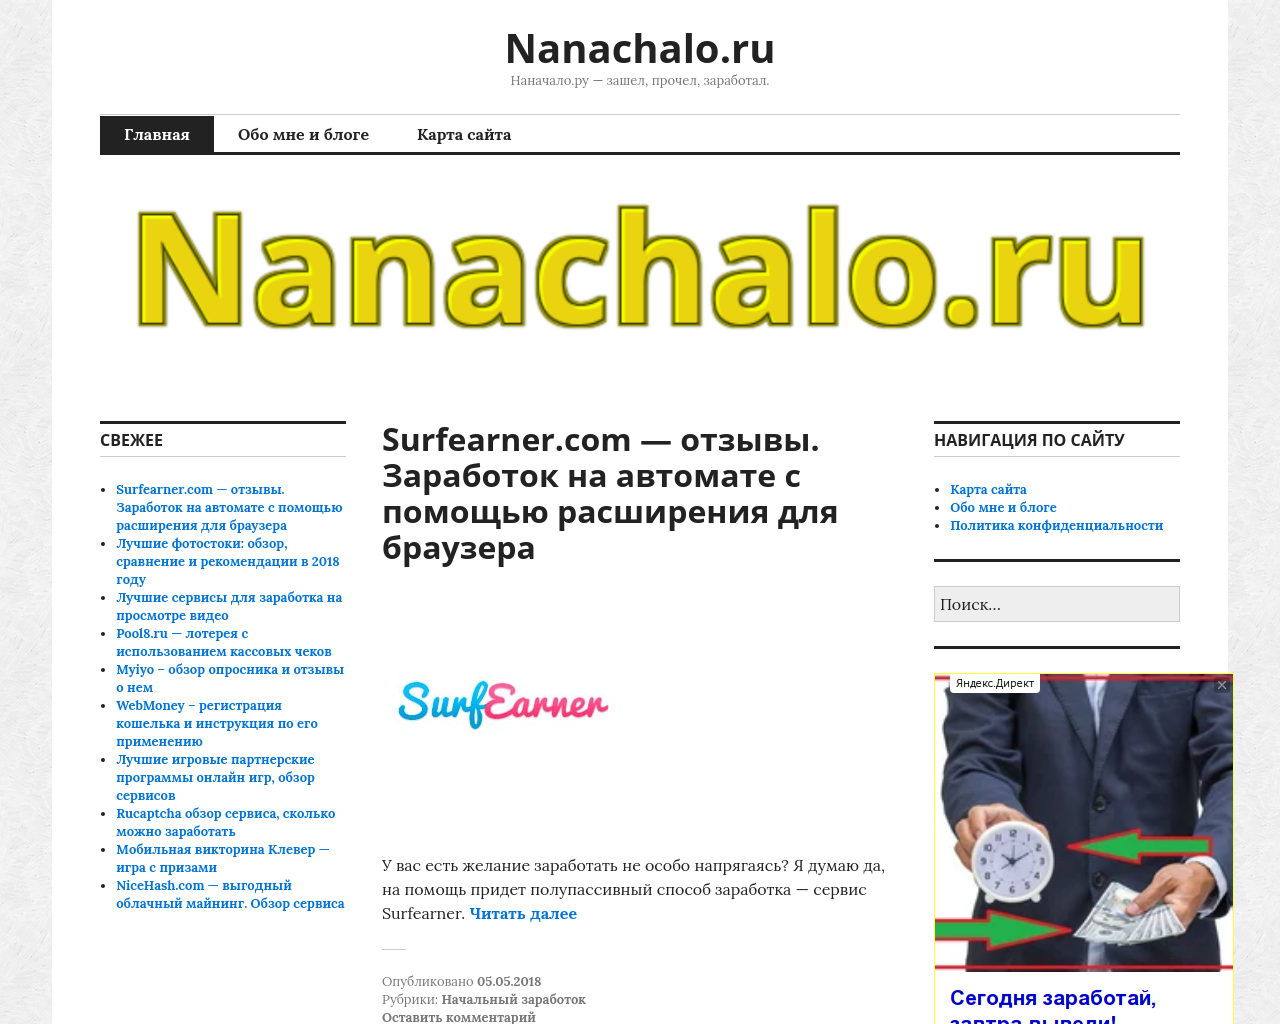 Изображение сайта nanachalo.ru в разрешении 1280x1024